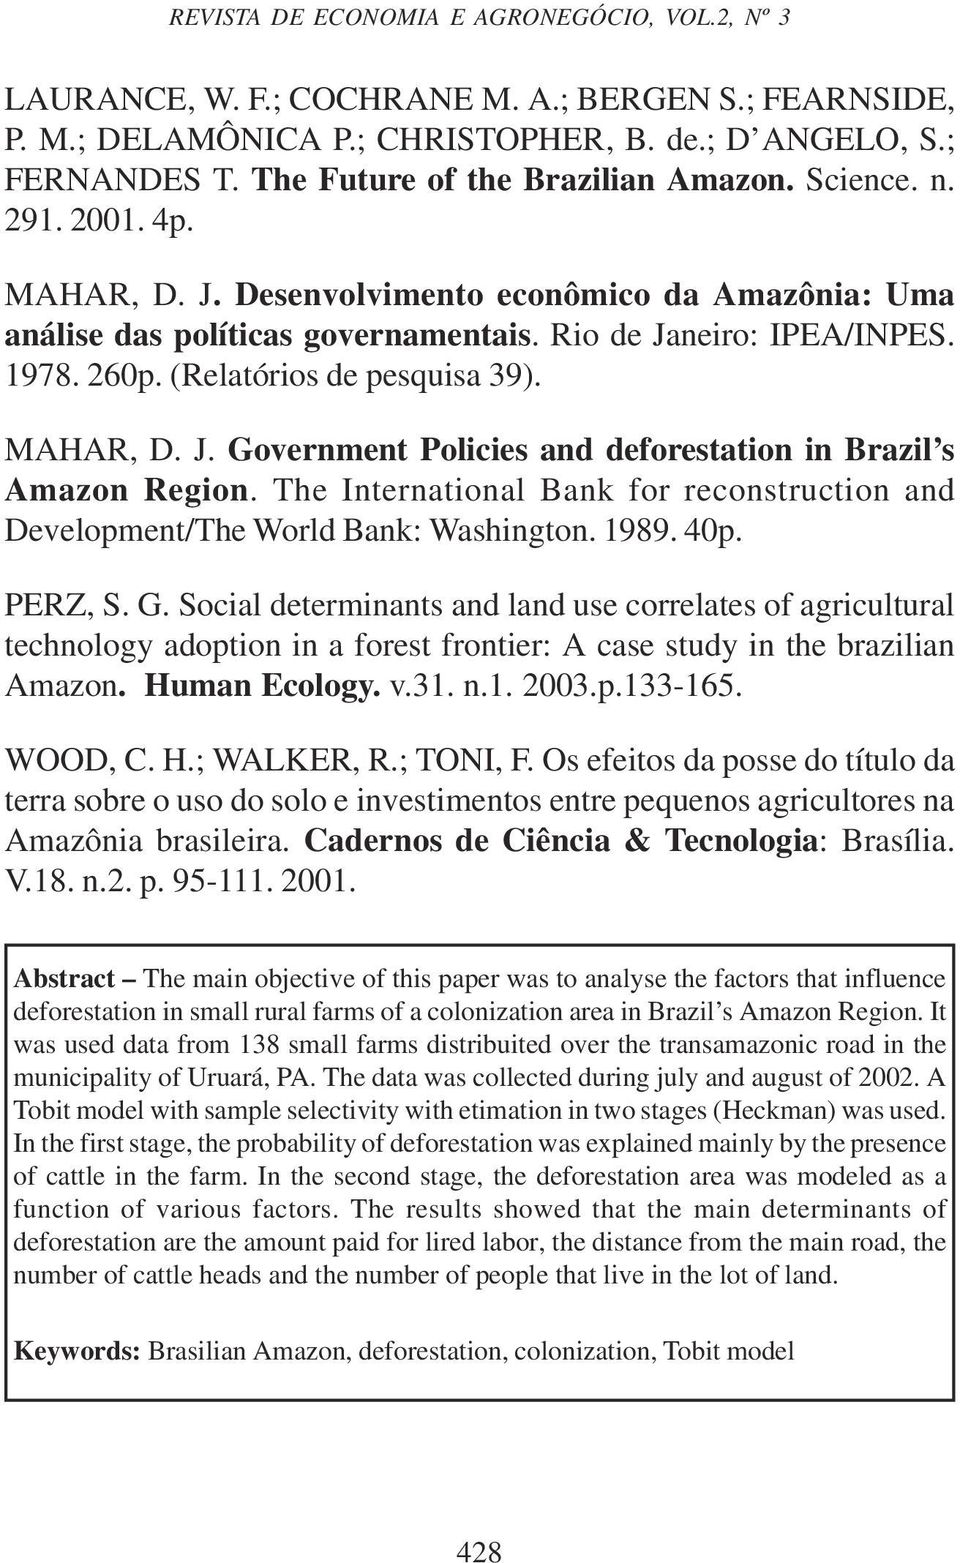 (Relatóros de pesqusa 39). MAHAR, D. J. Government Polces and deforestaton n Brazl s Amazon Regon. The Internatonal Bank for reconstructon and Development/The World Bank: Washngton. 1989. 40p.